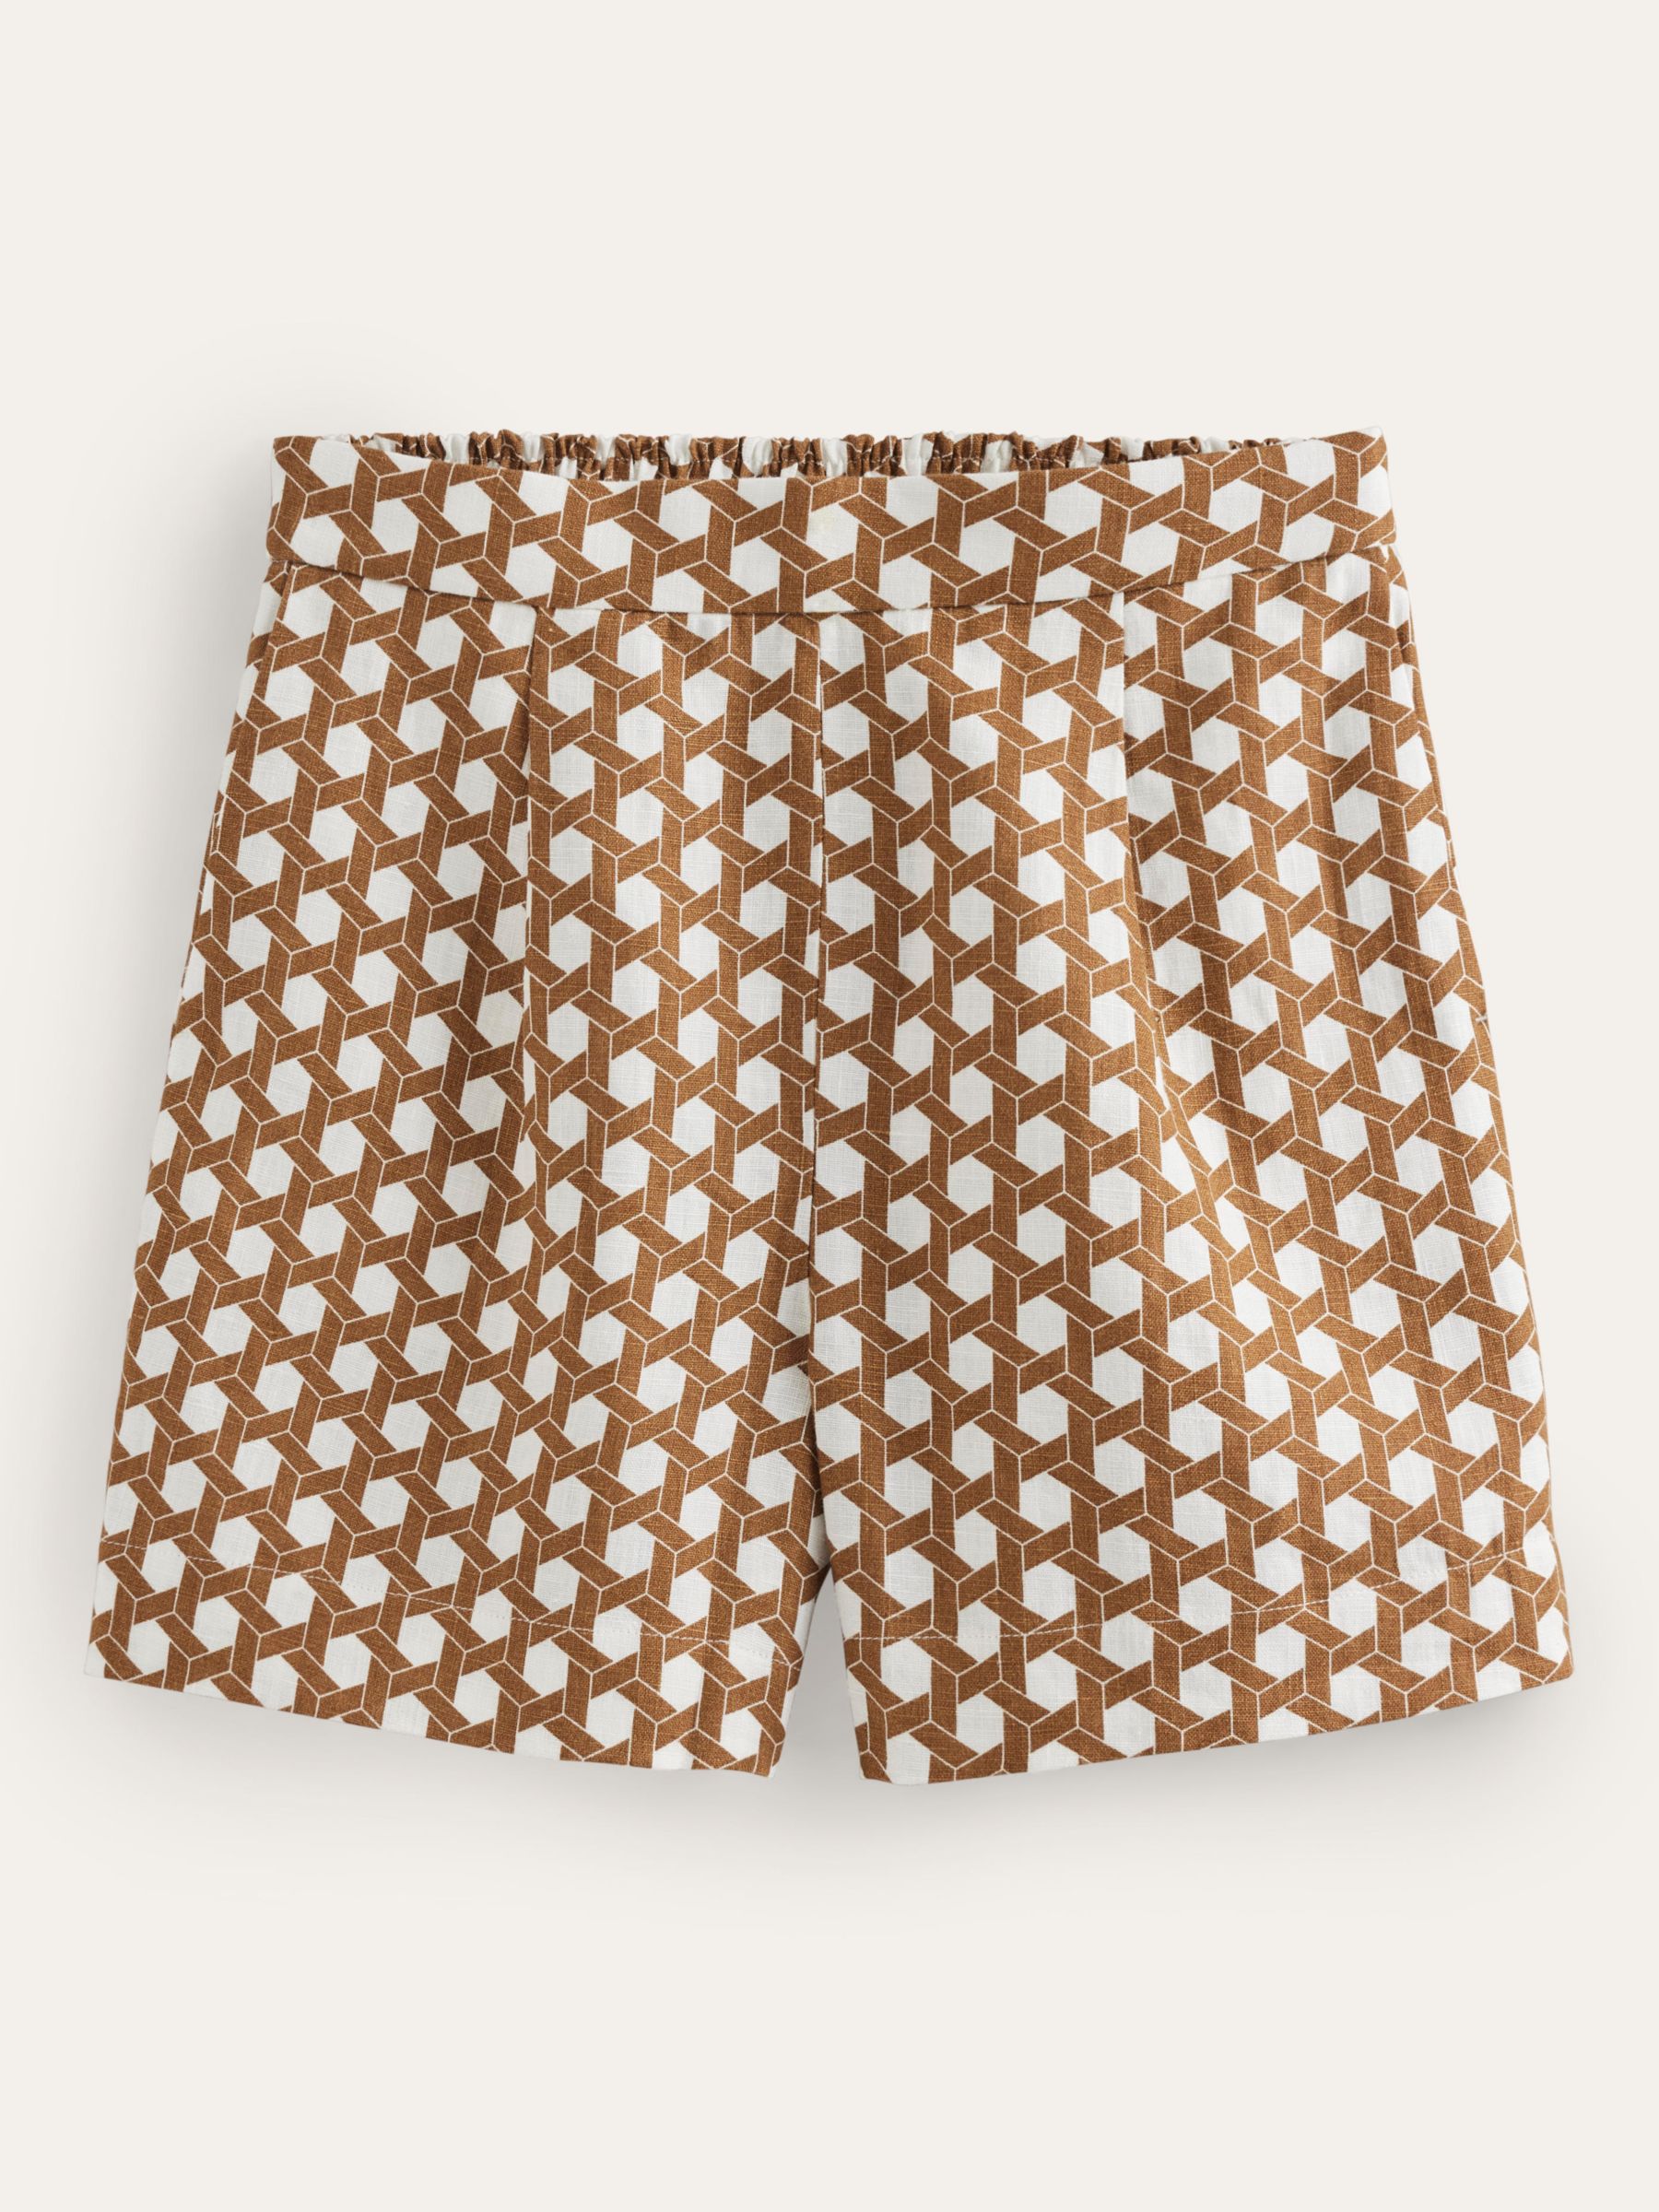 Boden Hampstead Honeycomb Geometric Linen Shorts, Rubber, 8